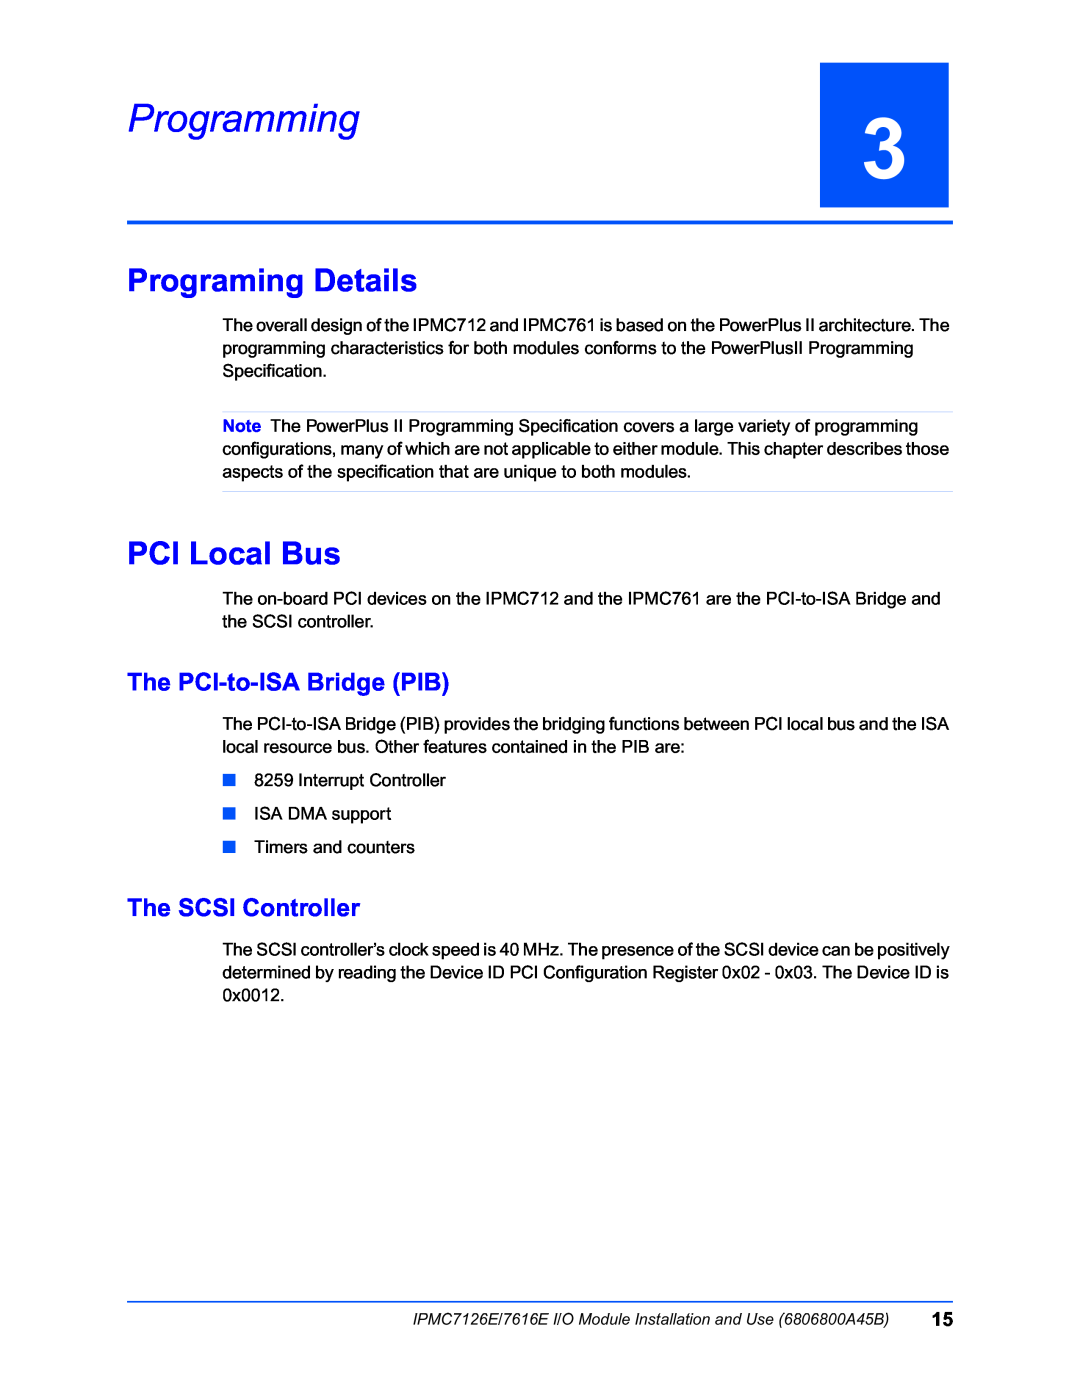 Emerson IPMC7126E manual Programming, Programing Details, PCI Local Bus, The PCI-to-ISA Bridge PIB, The SCSI Controller 